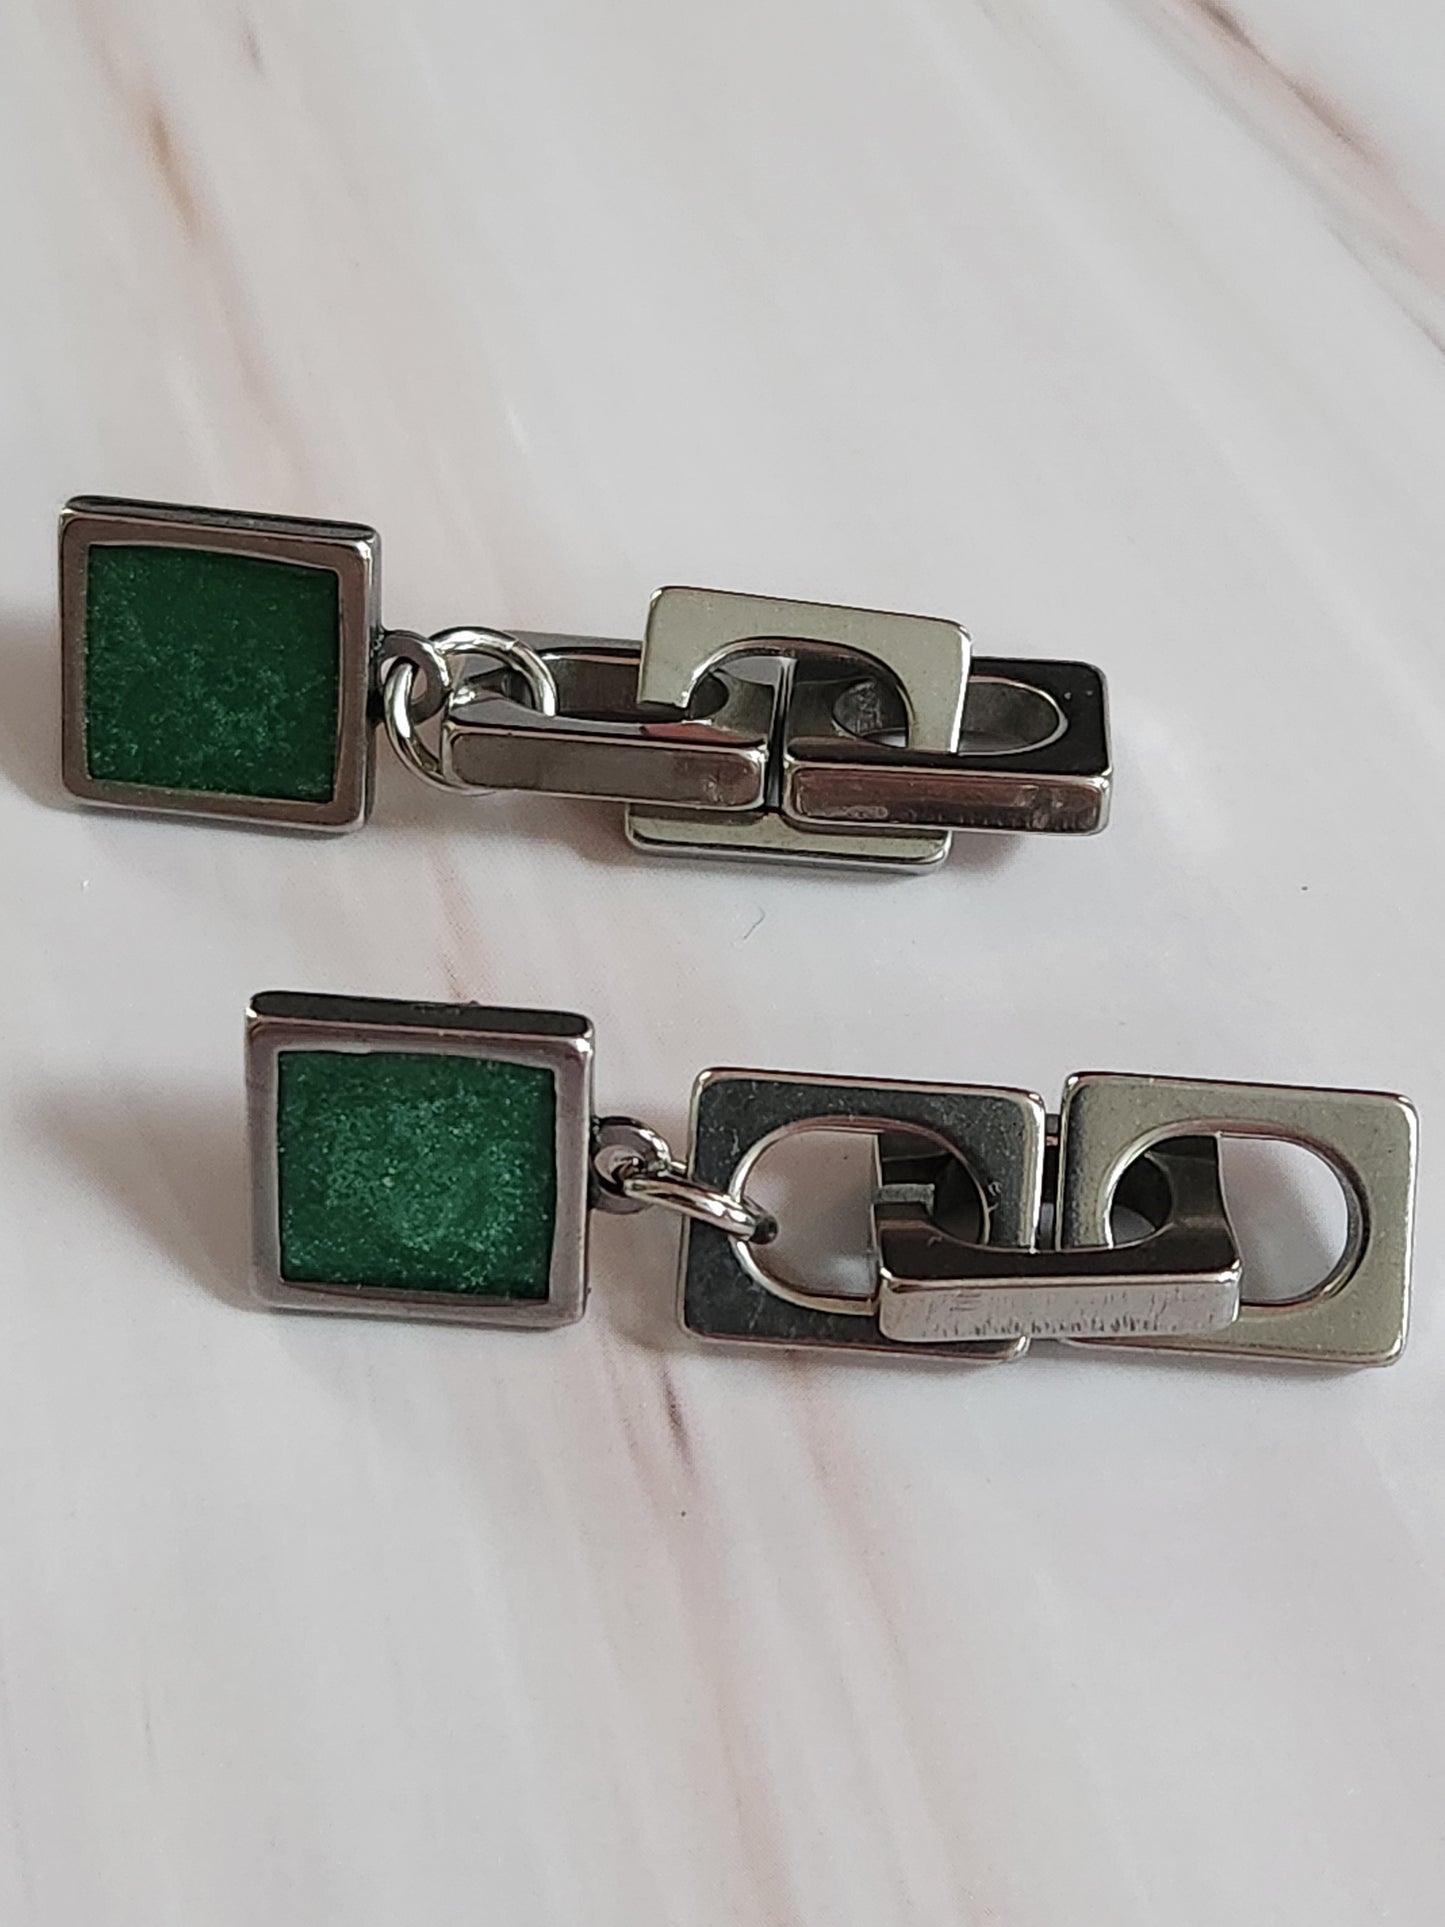 Emerald Square Stud Earrings